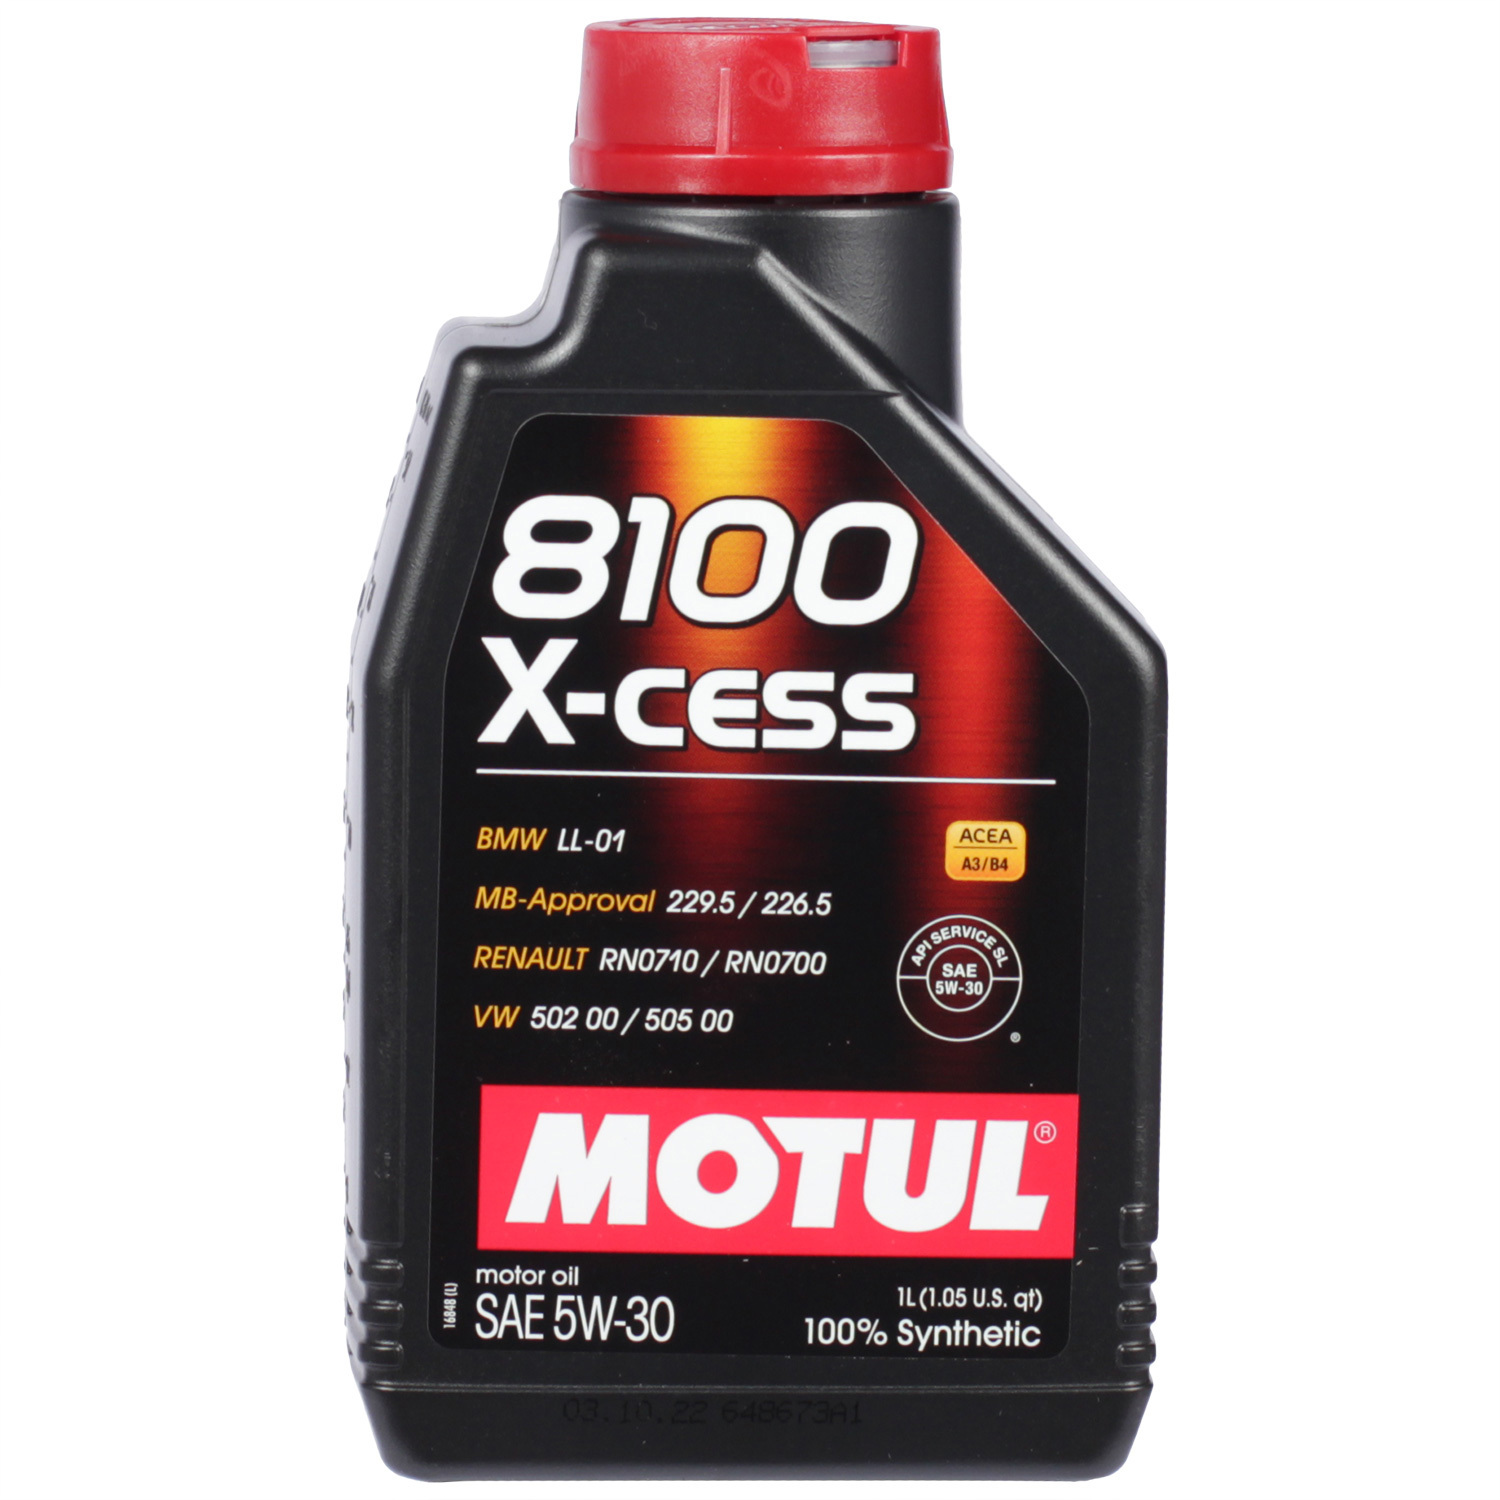 Моторное масло Motul 8100 X-cess 5W-30, 1 л - фото 1